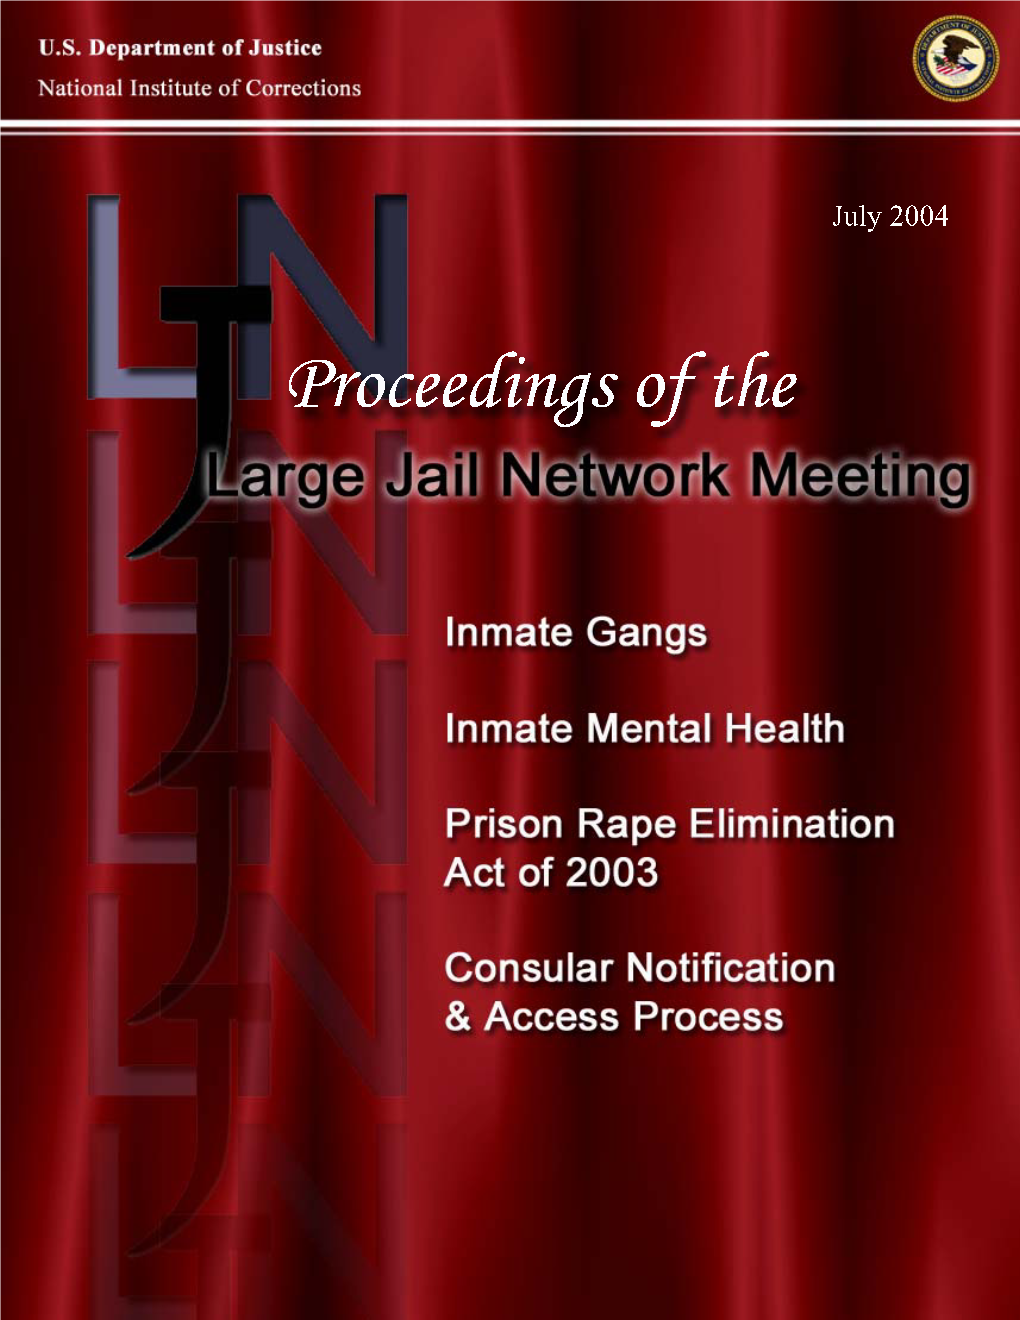 Large Jail Network Meeting